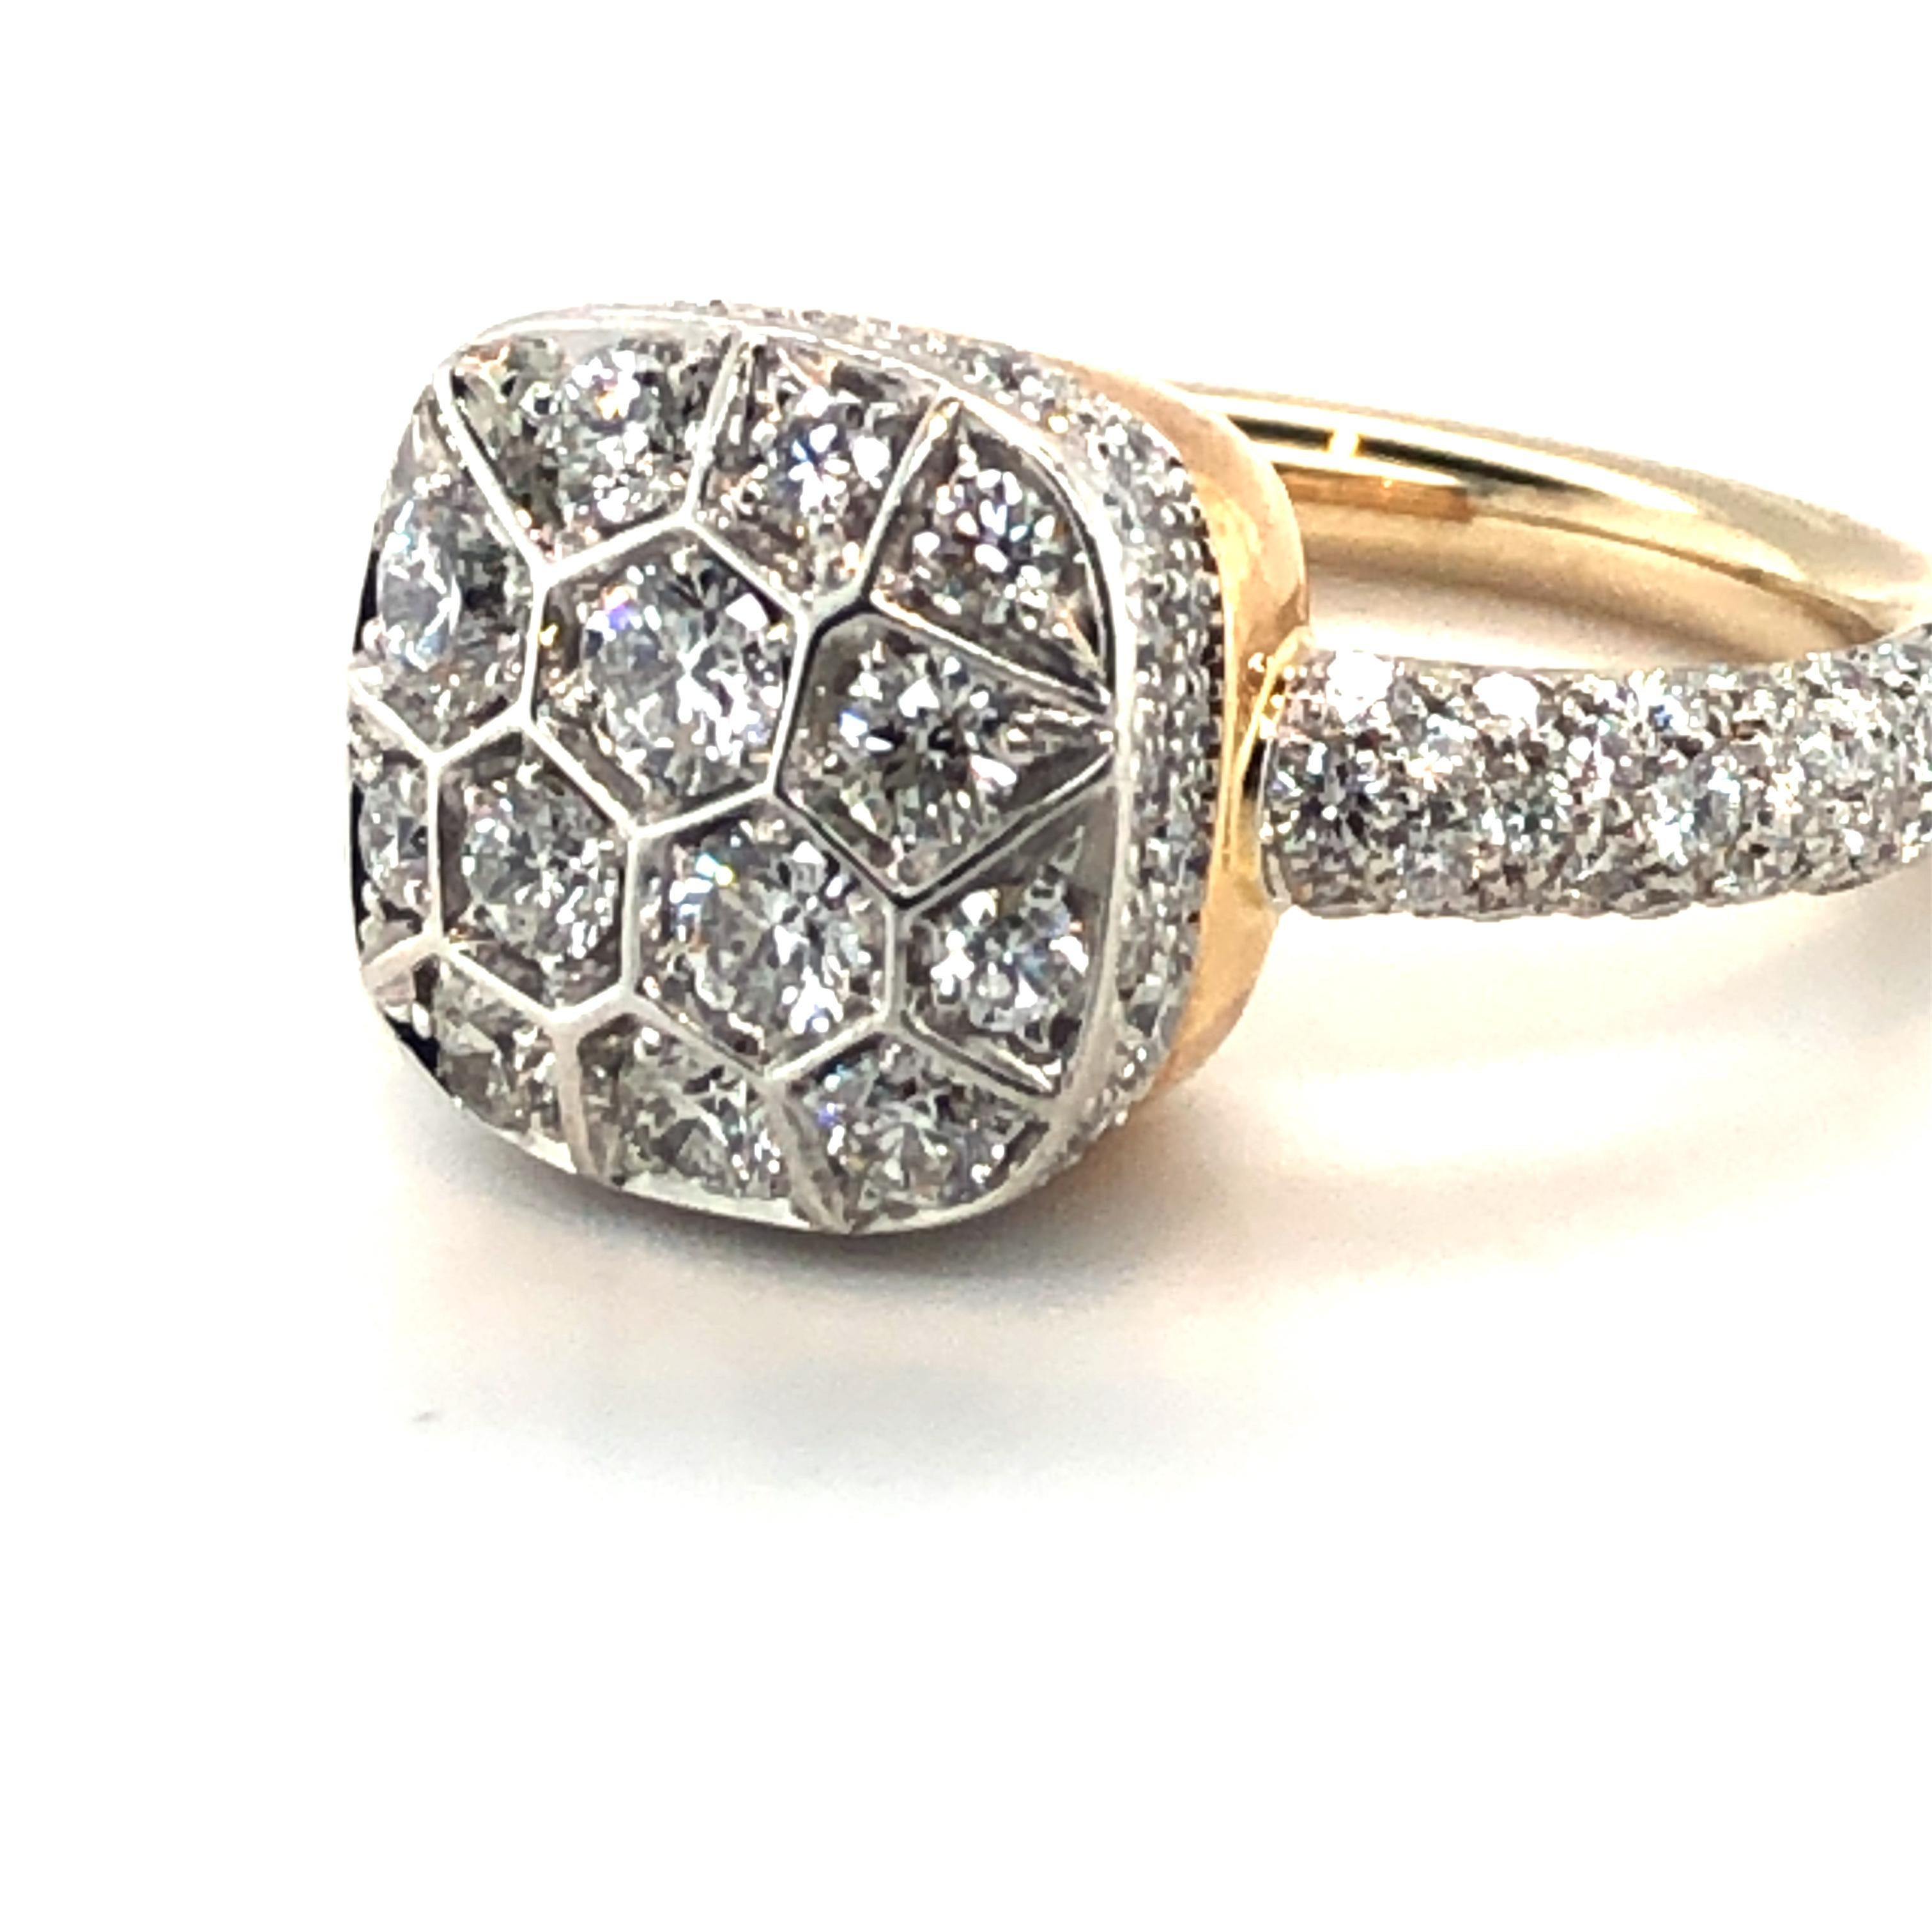 Contemporary Pomellato Nudo Maxi Solitaire Ring with Diamonds in 18 Karat White and Rose Gold